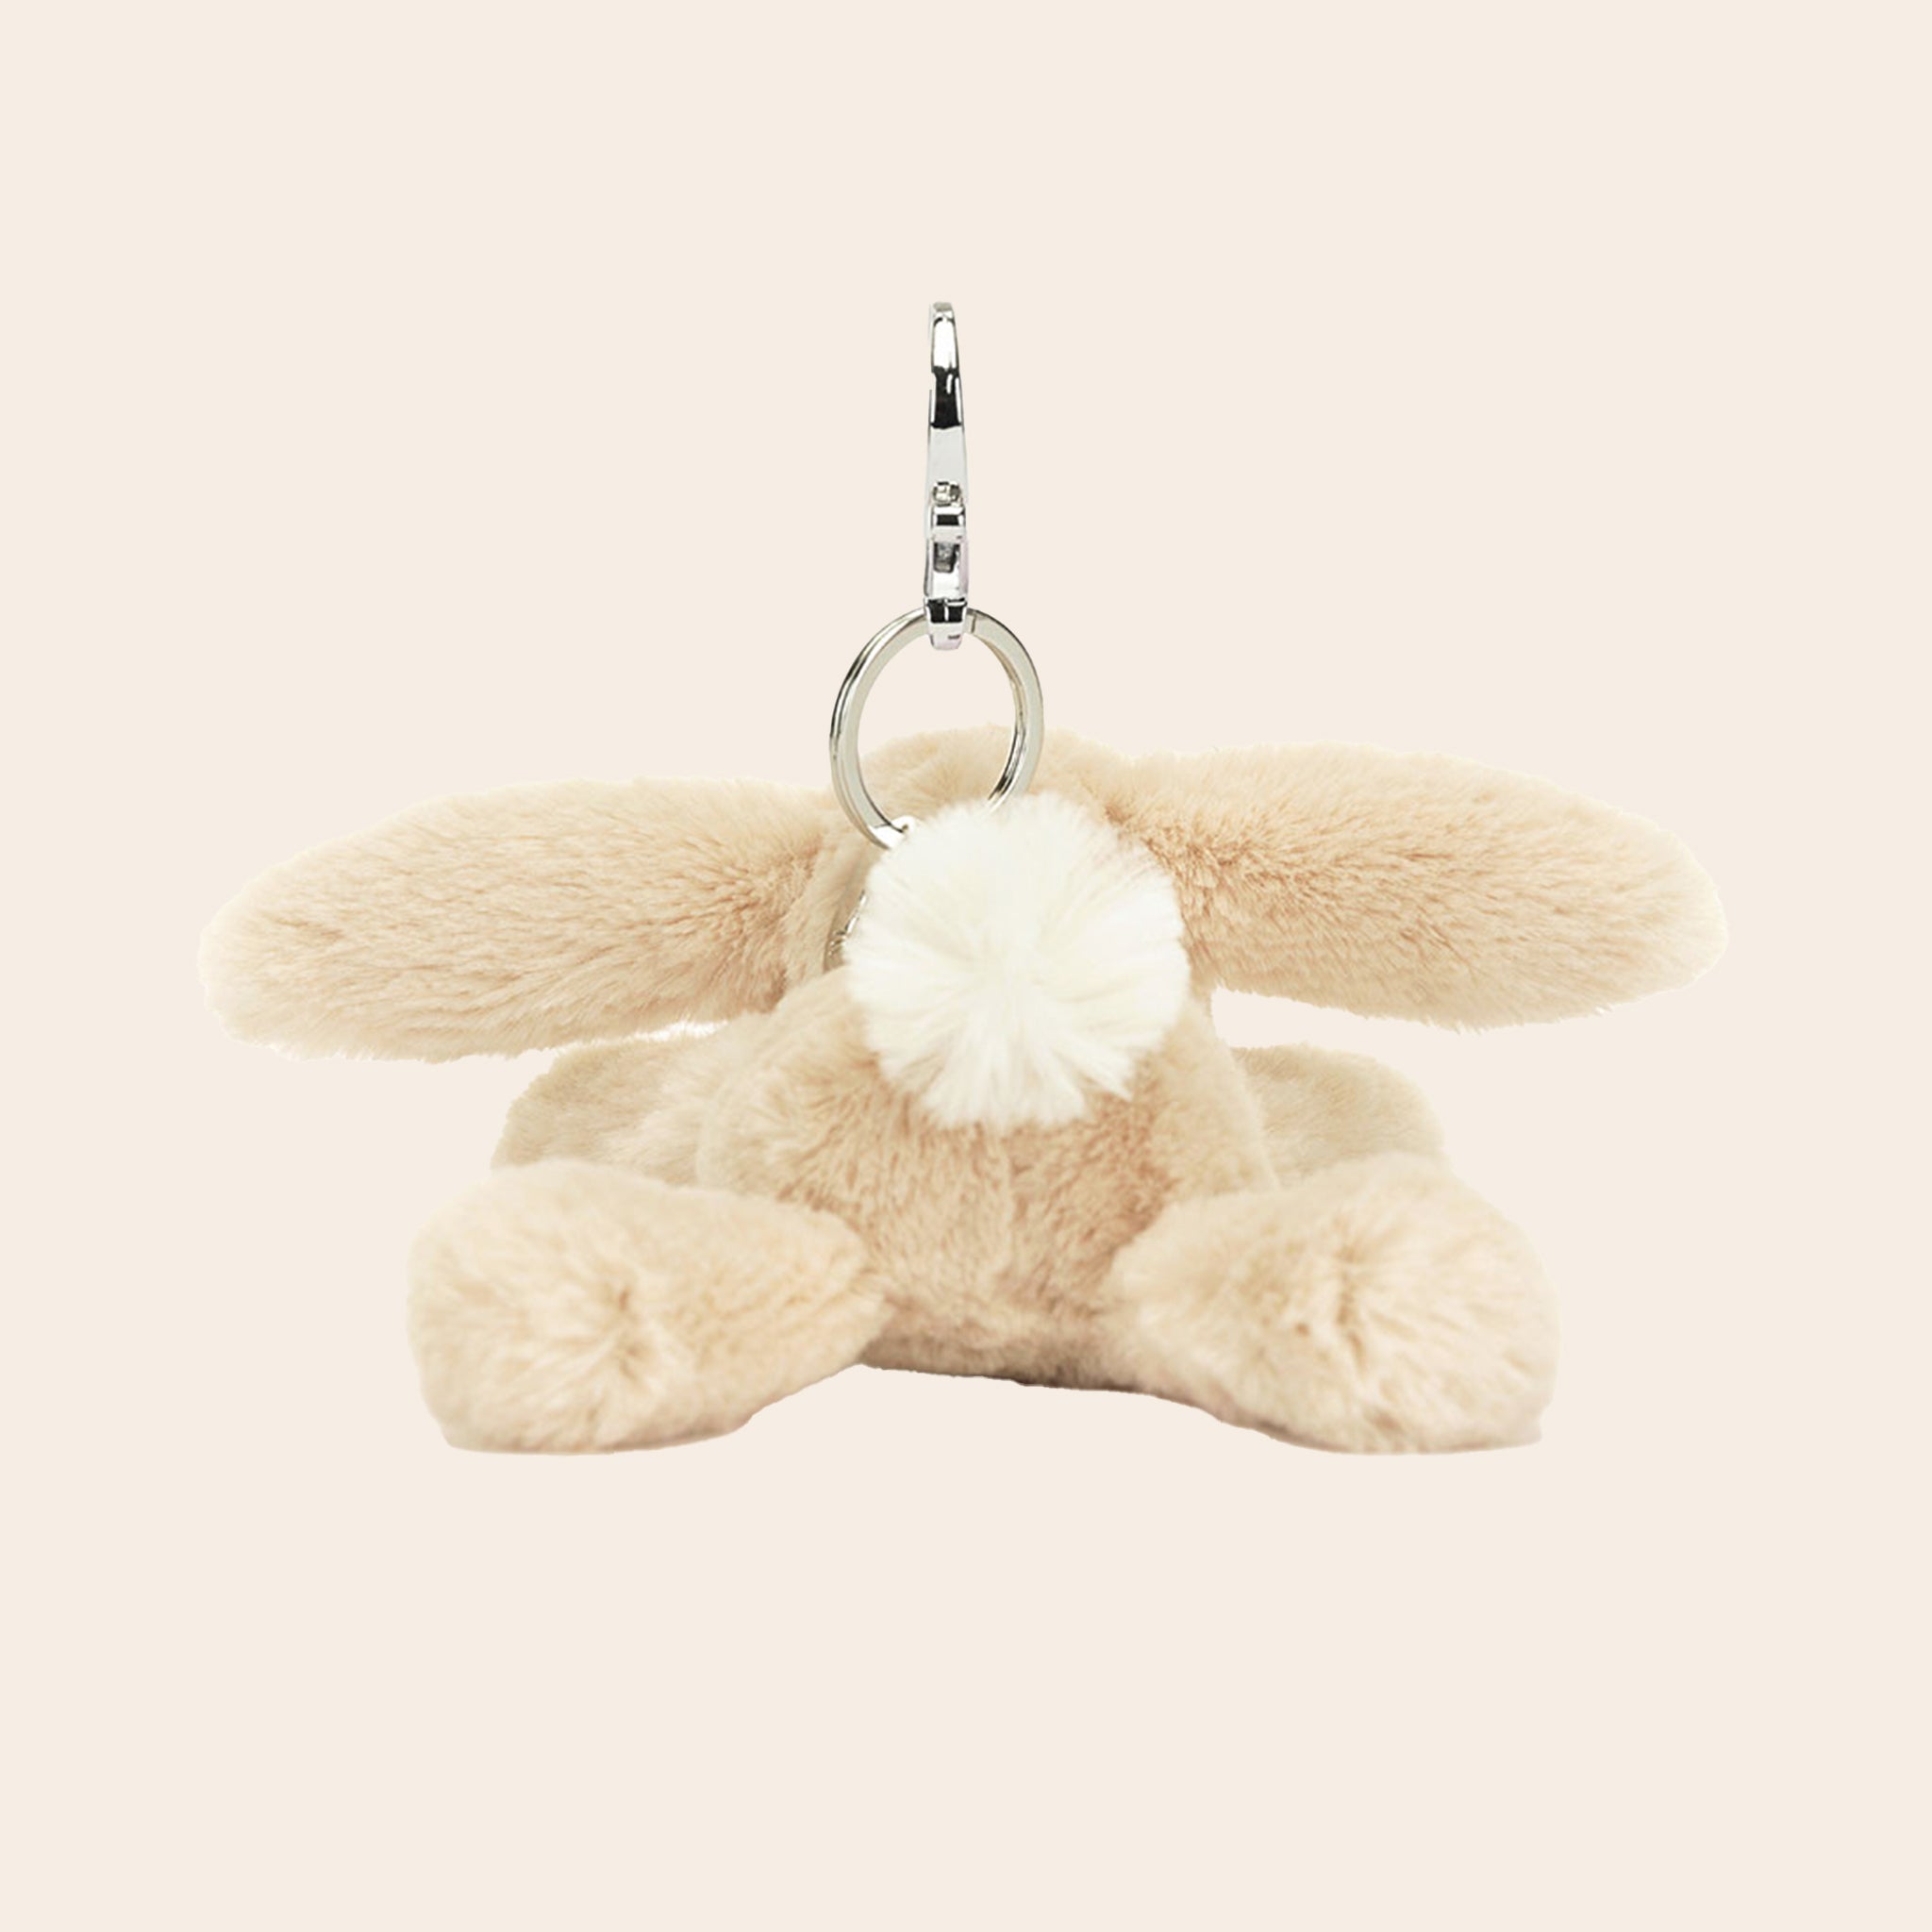 A mini bunny stuffed animal on a silver keychain.